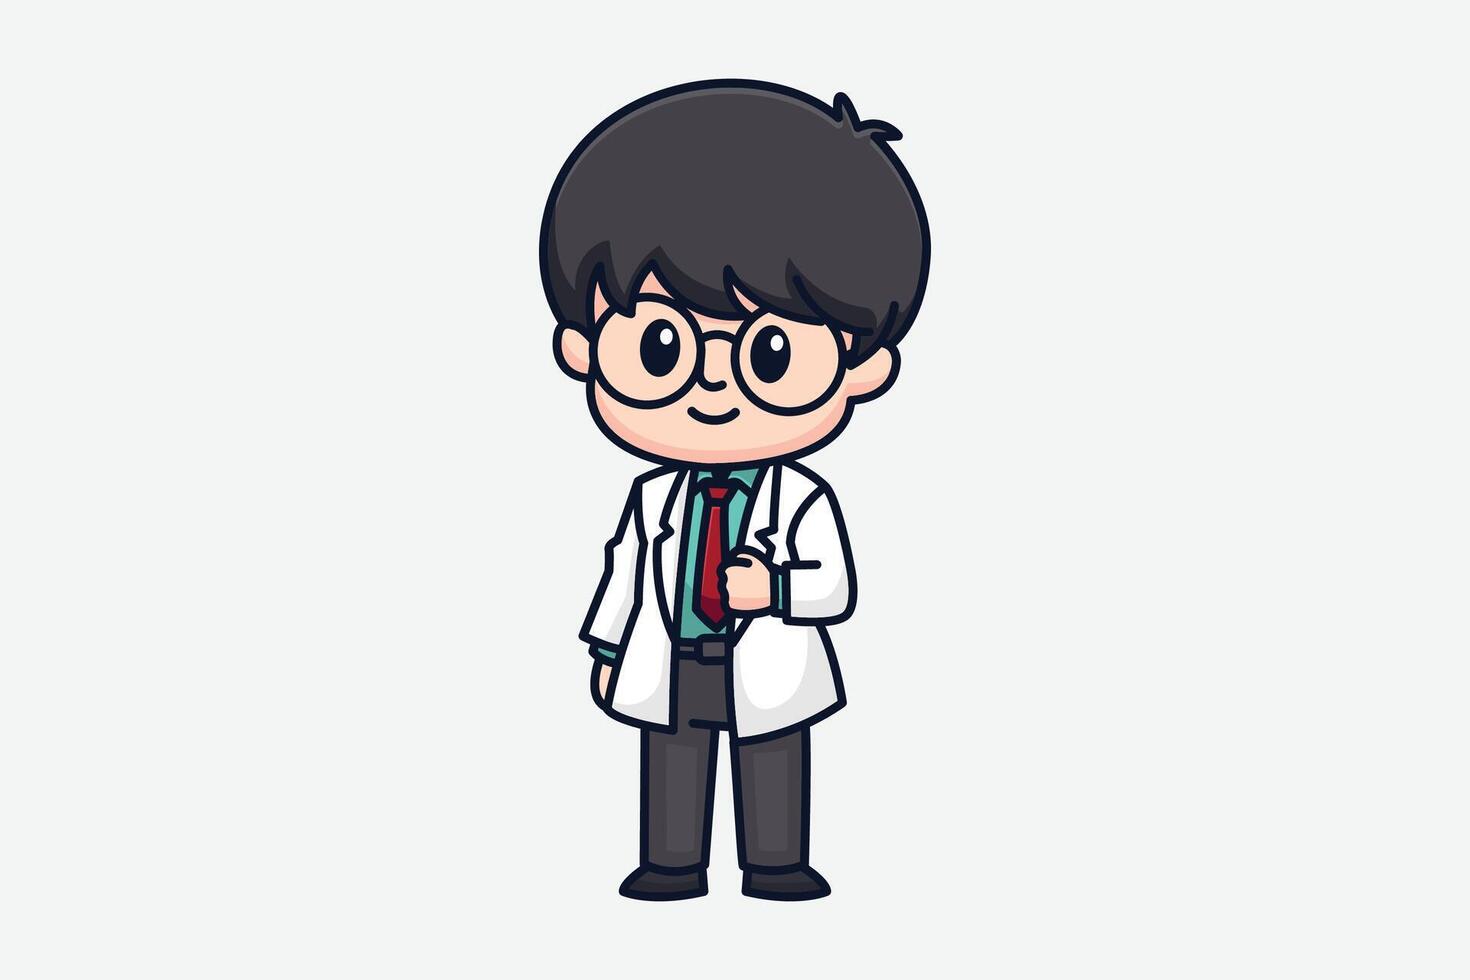 Cute Doctor Cartoon Character Illustration vector